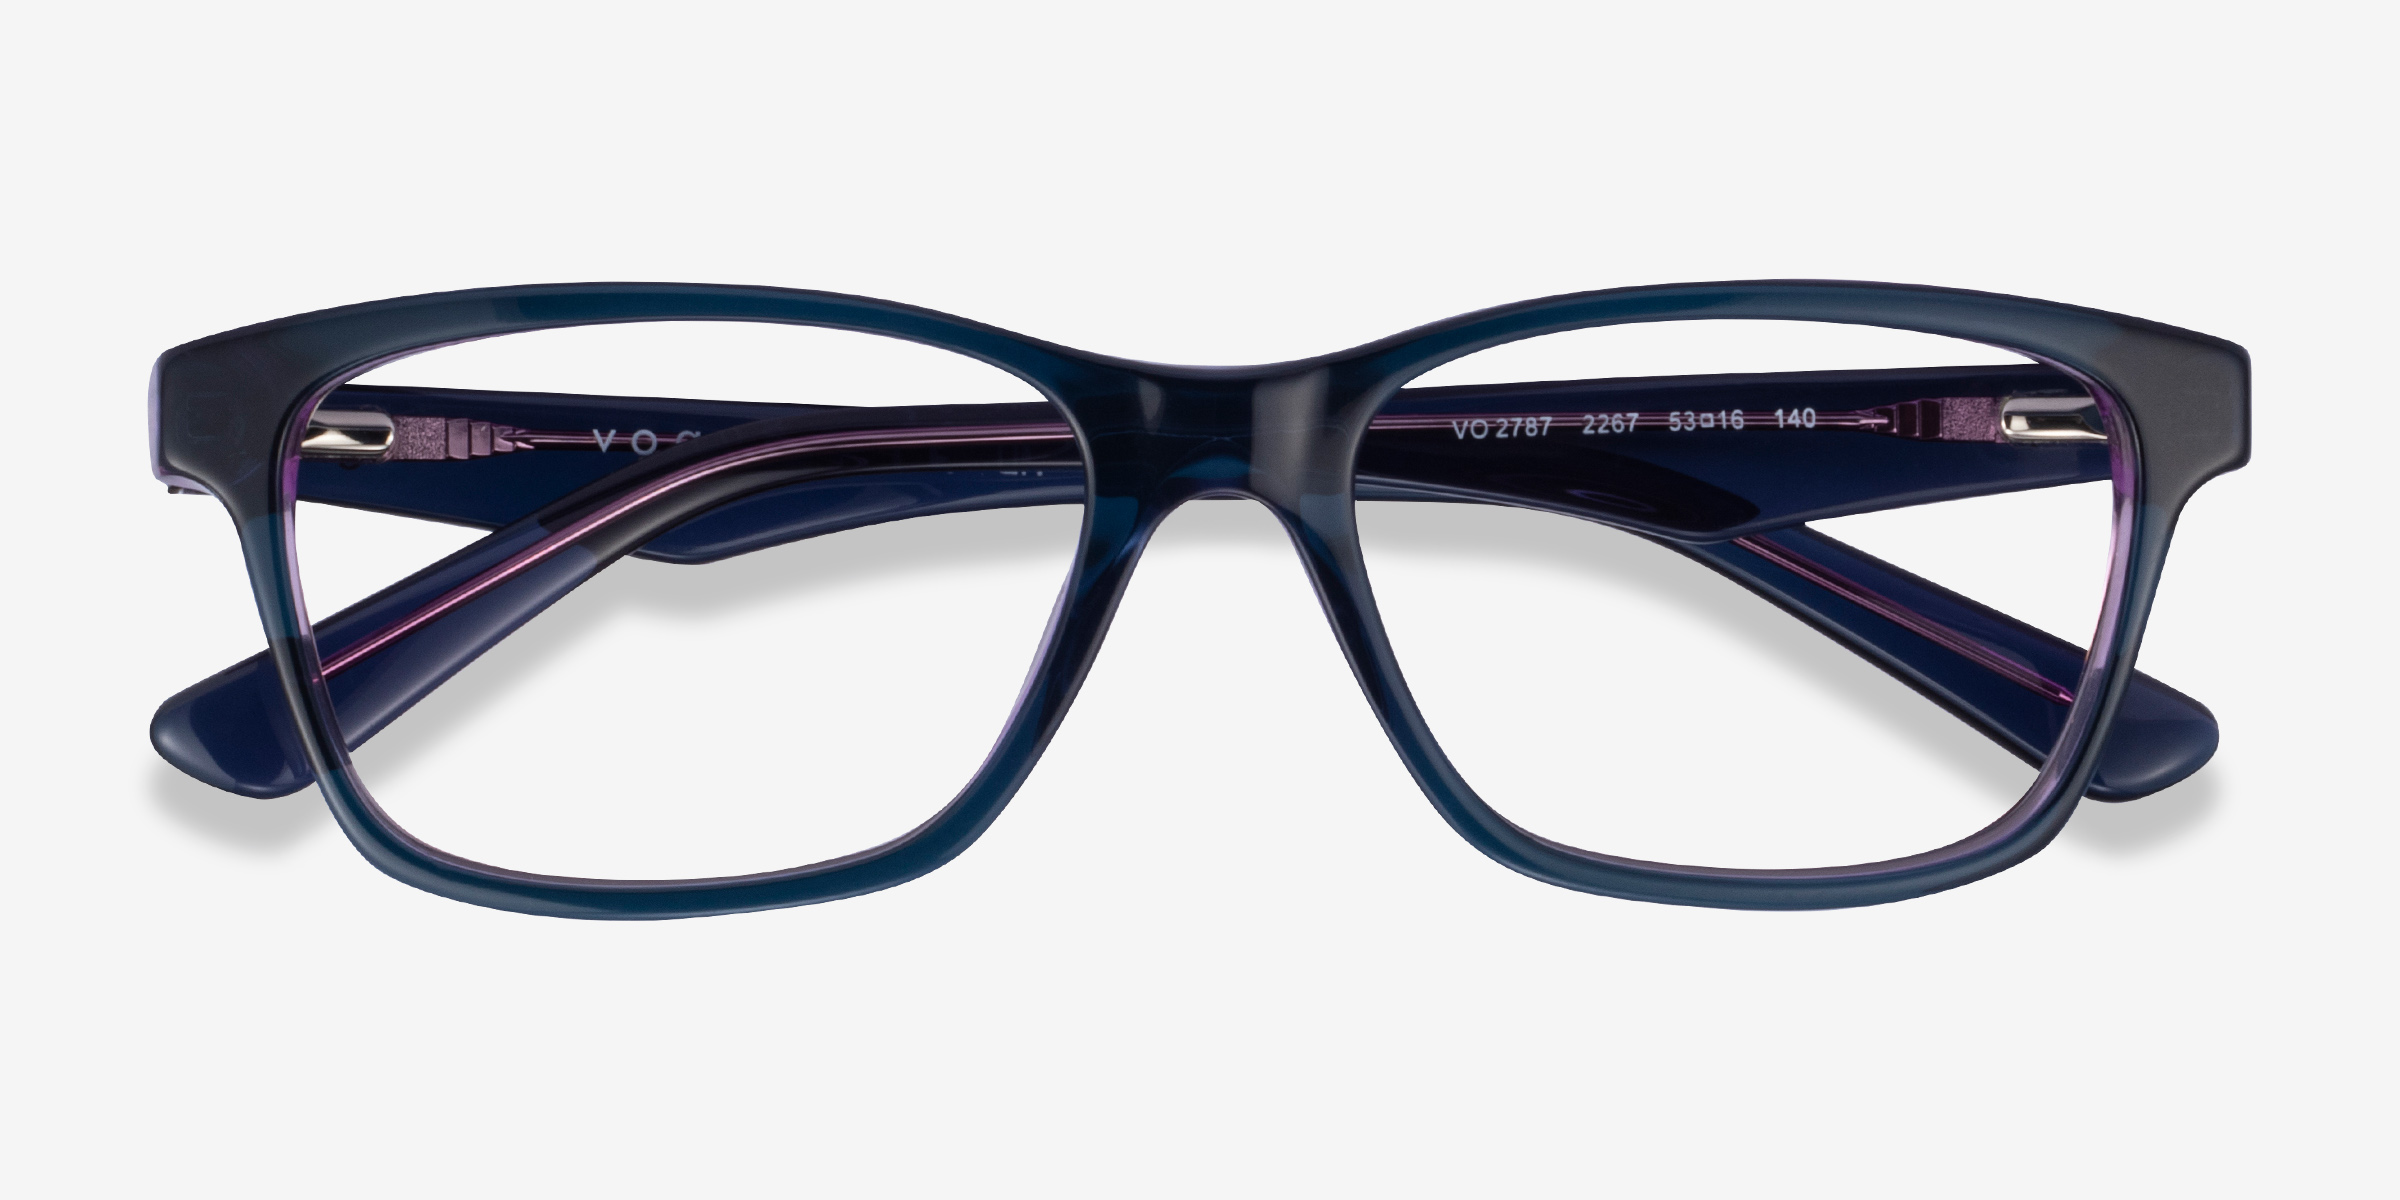 Vogue Eyewear Vo2787 Rectangle Purple Frame Glasses For Women Eyebuydirect